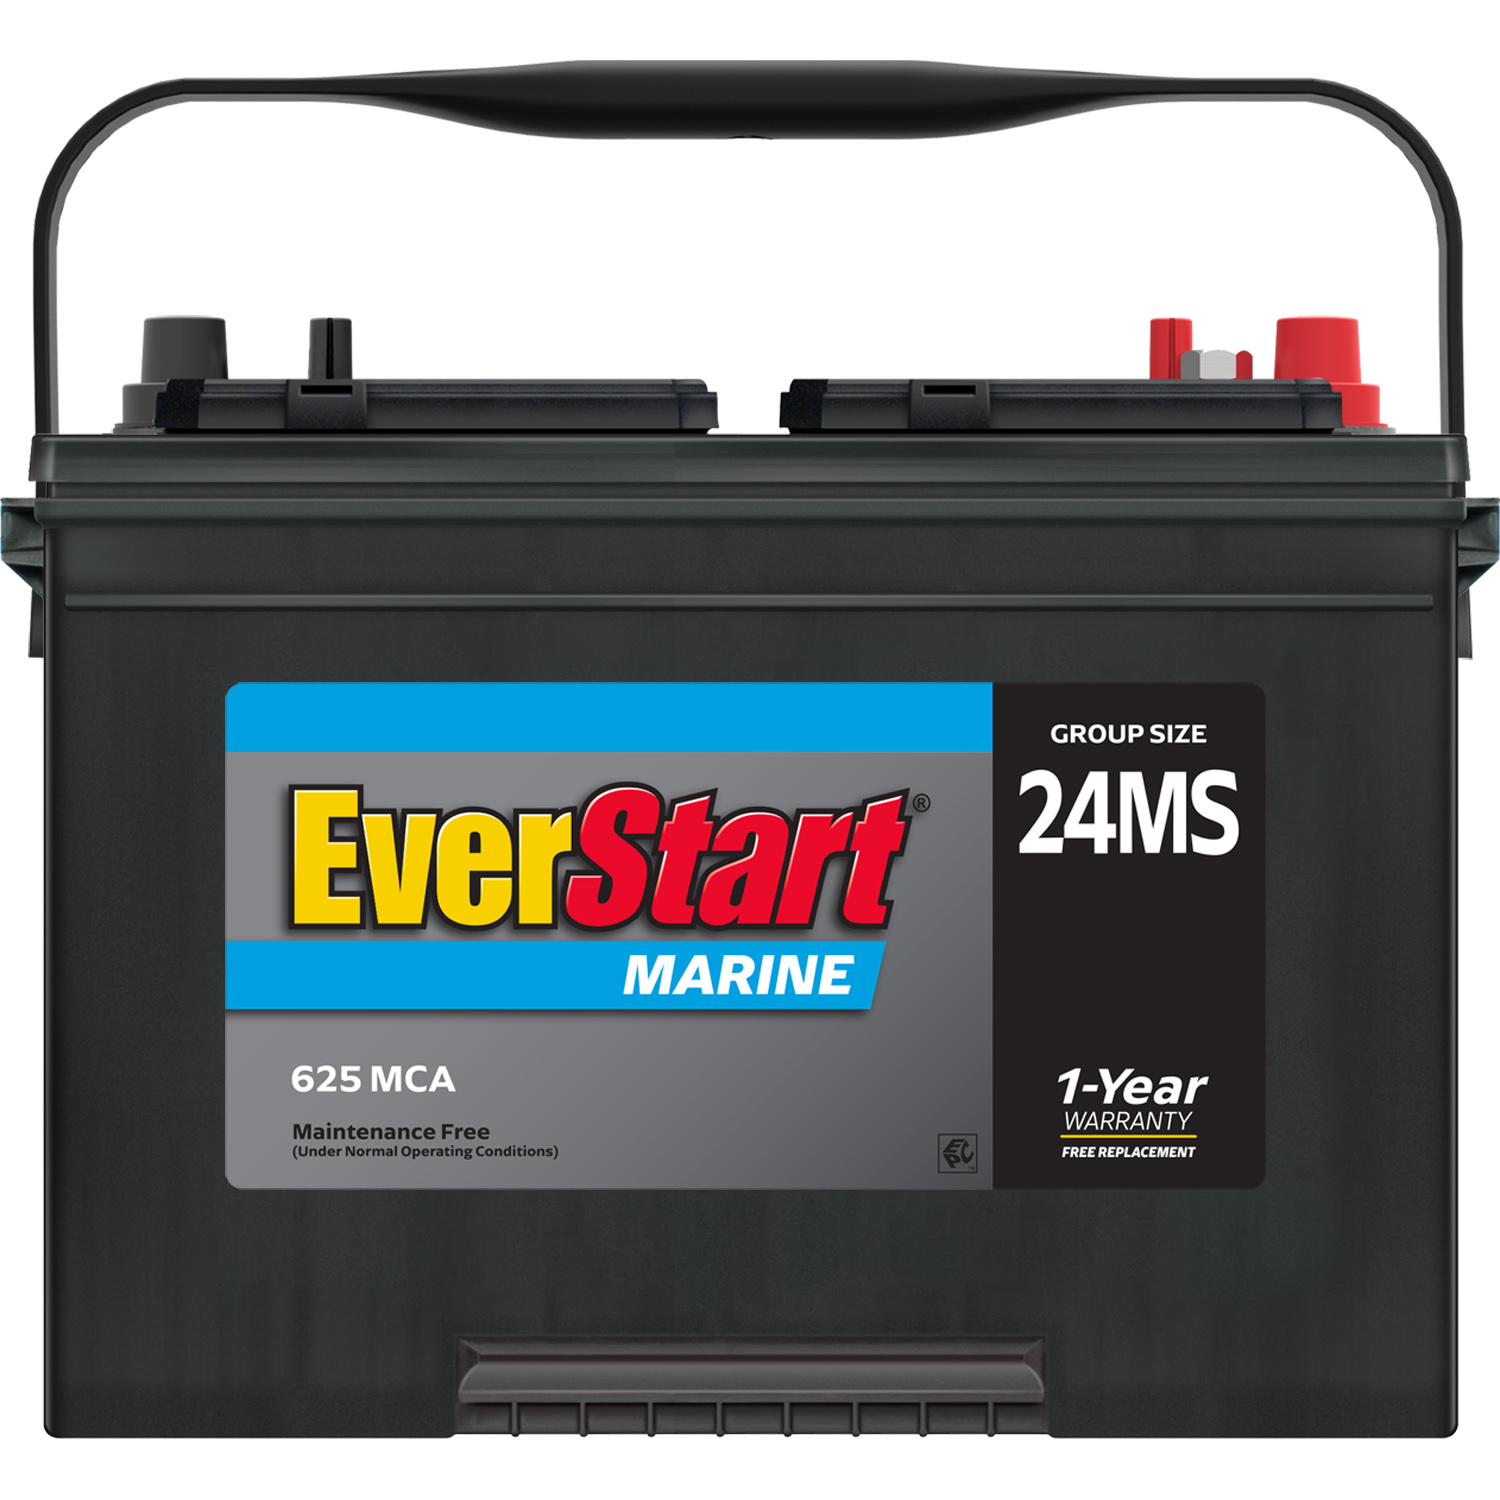 EverStart Lead Acid Marine Starting Battery, Group Size 24MS 12 Volt, 625 MCA - image 3 of 7